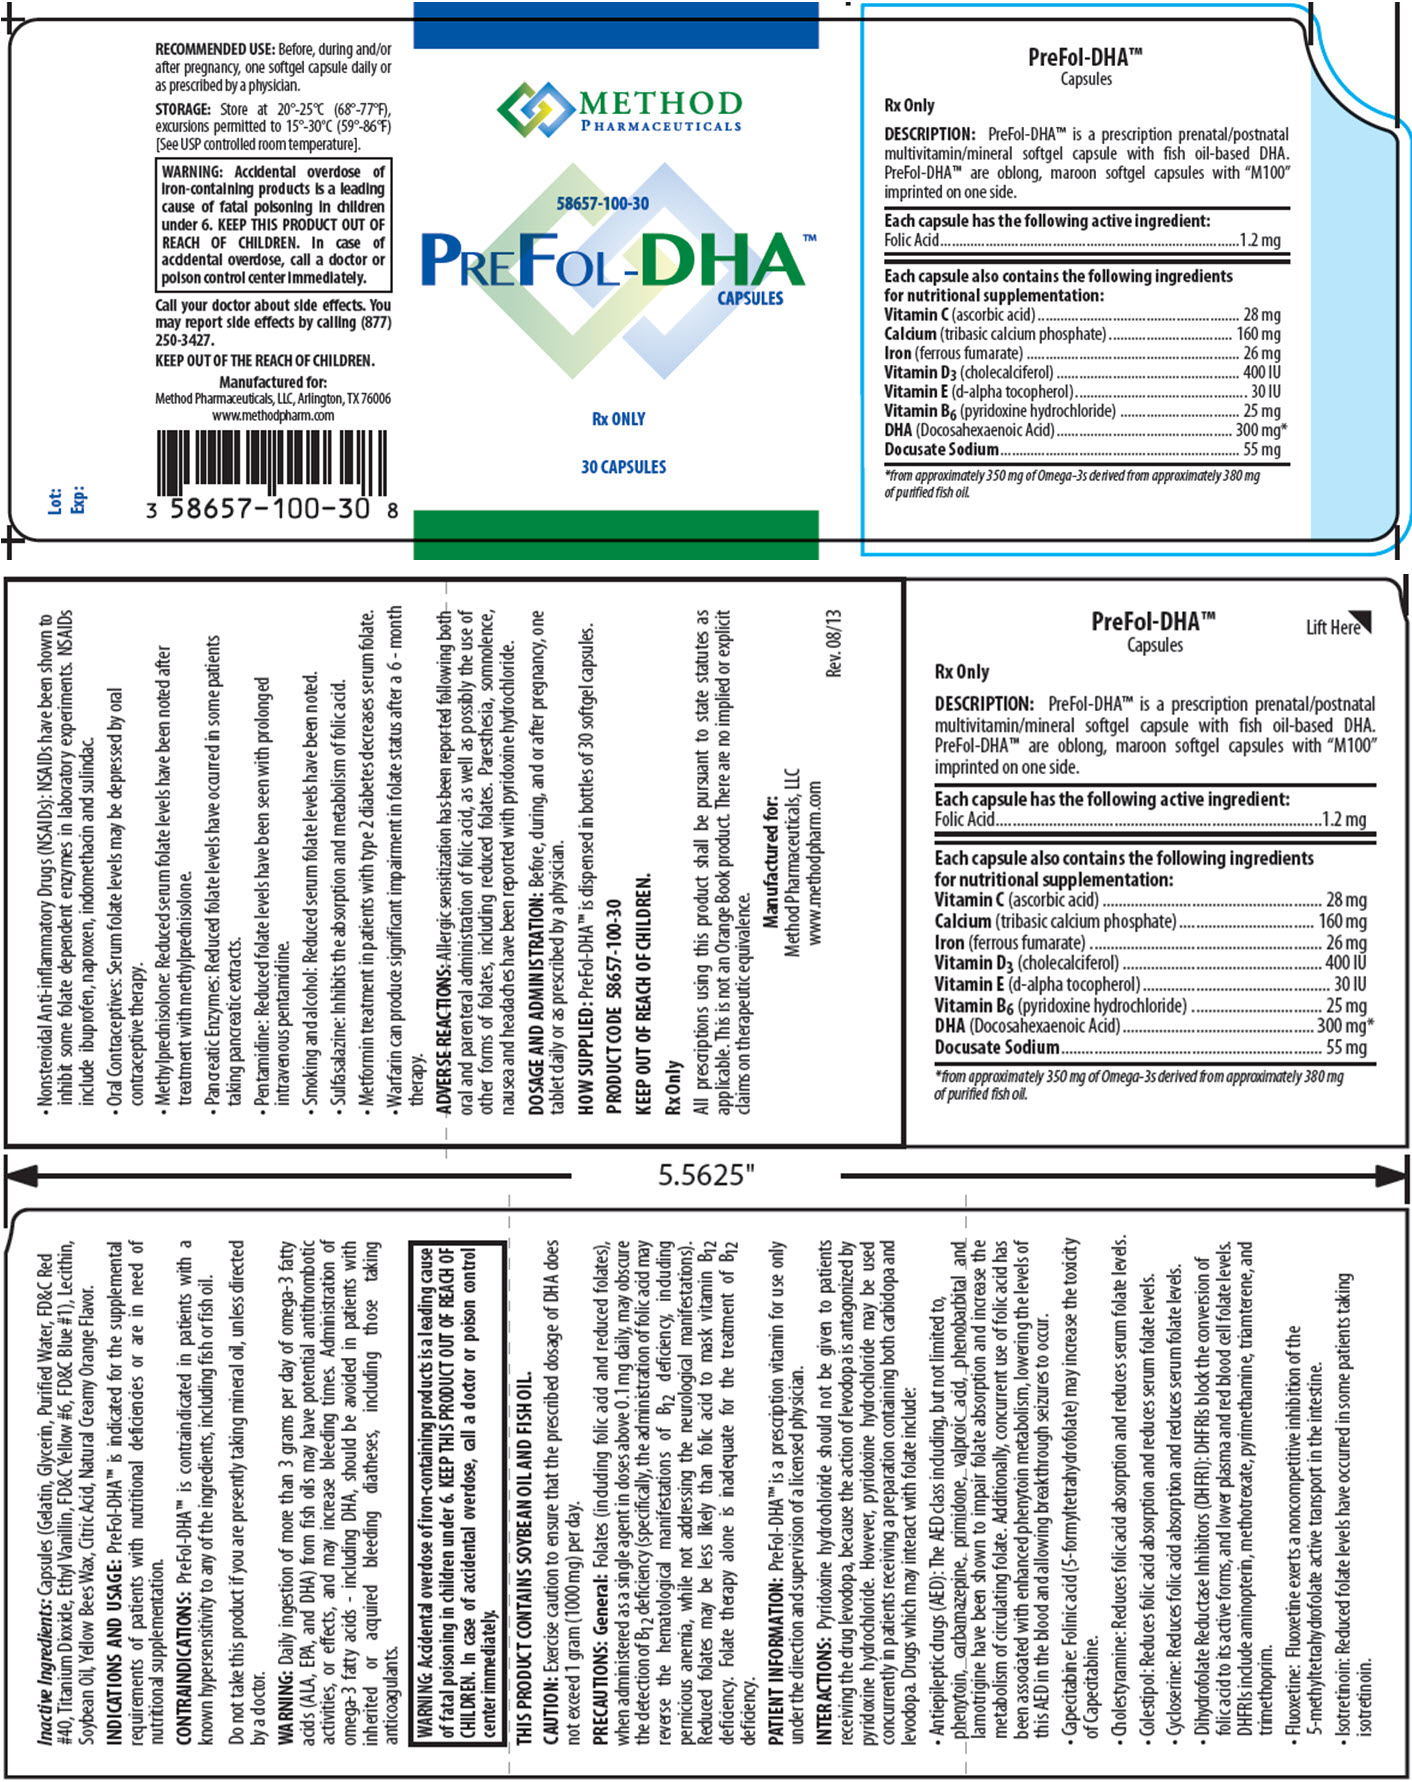 PRINCIPAL DISPLAY PANEL 58657-100-30 PreFol-DHATM CAPSULES Rx ONLY 30 CAPSULES